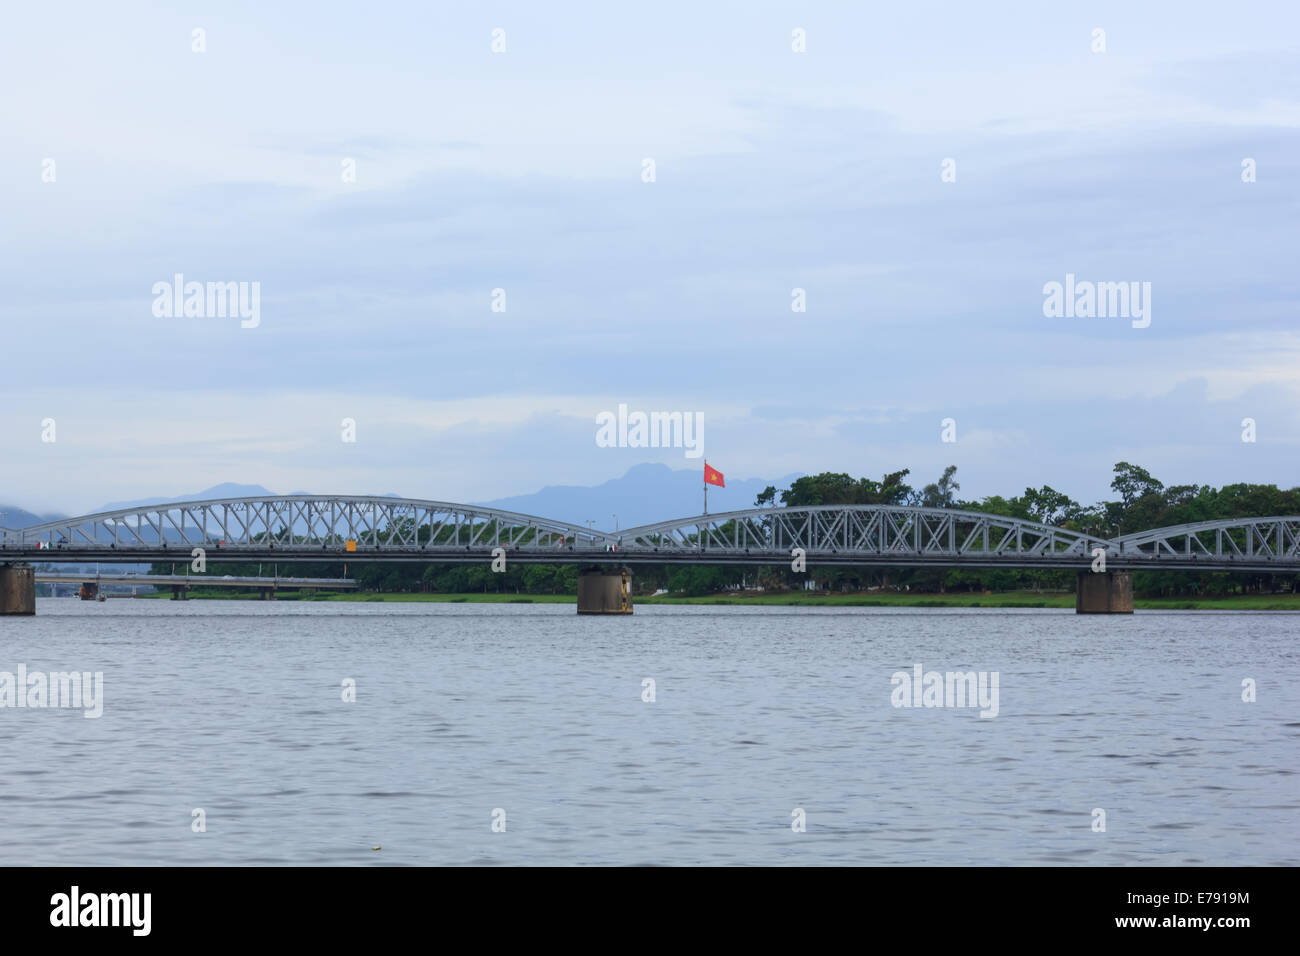 The bridge over the river in Vietnam Stock Photo